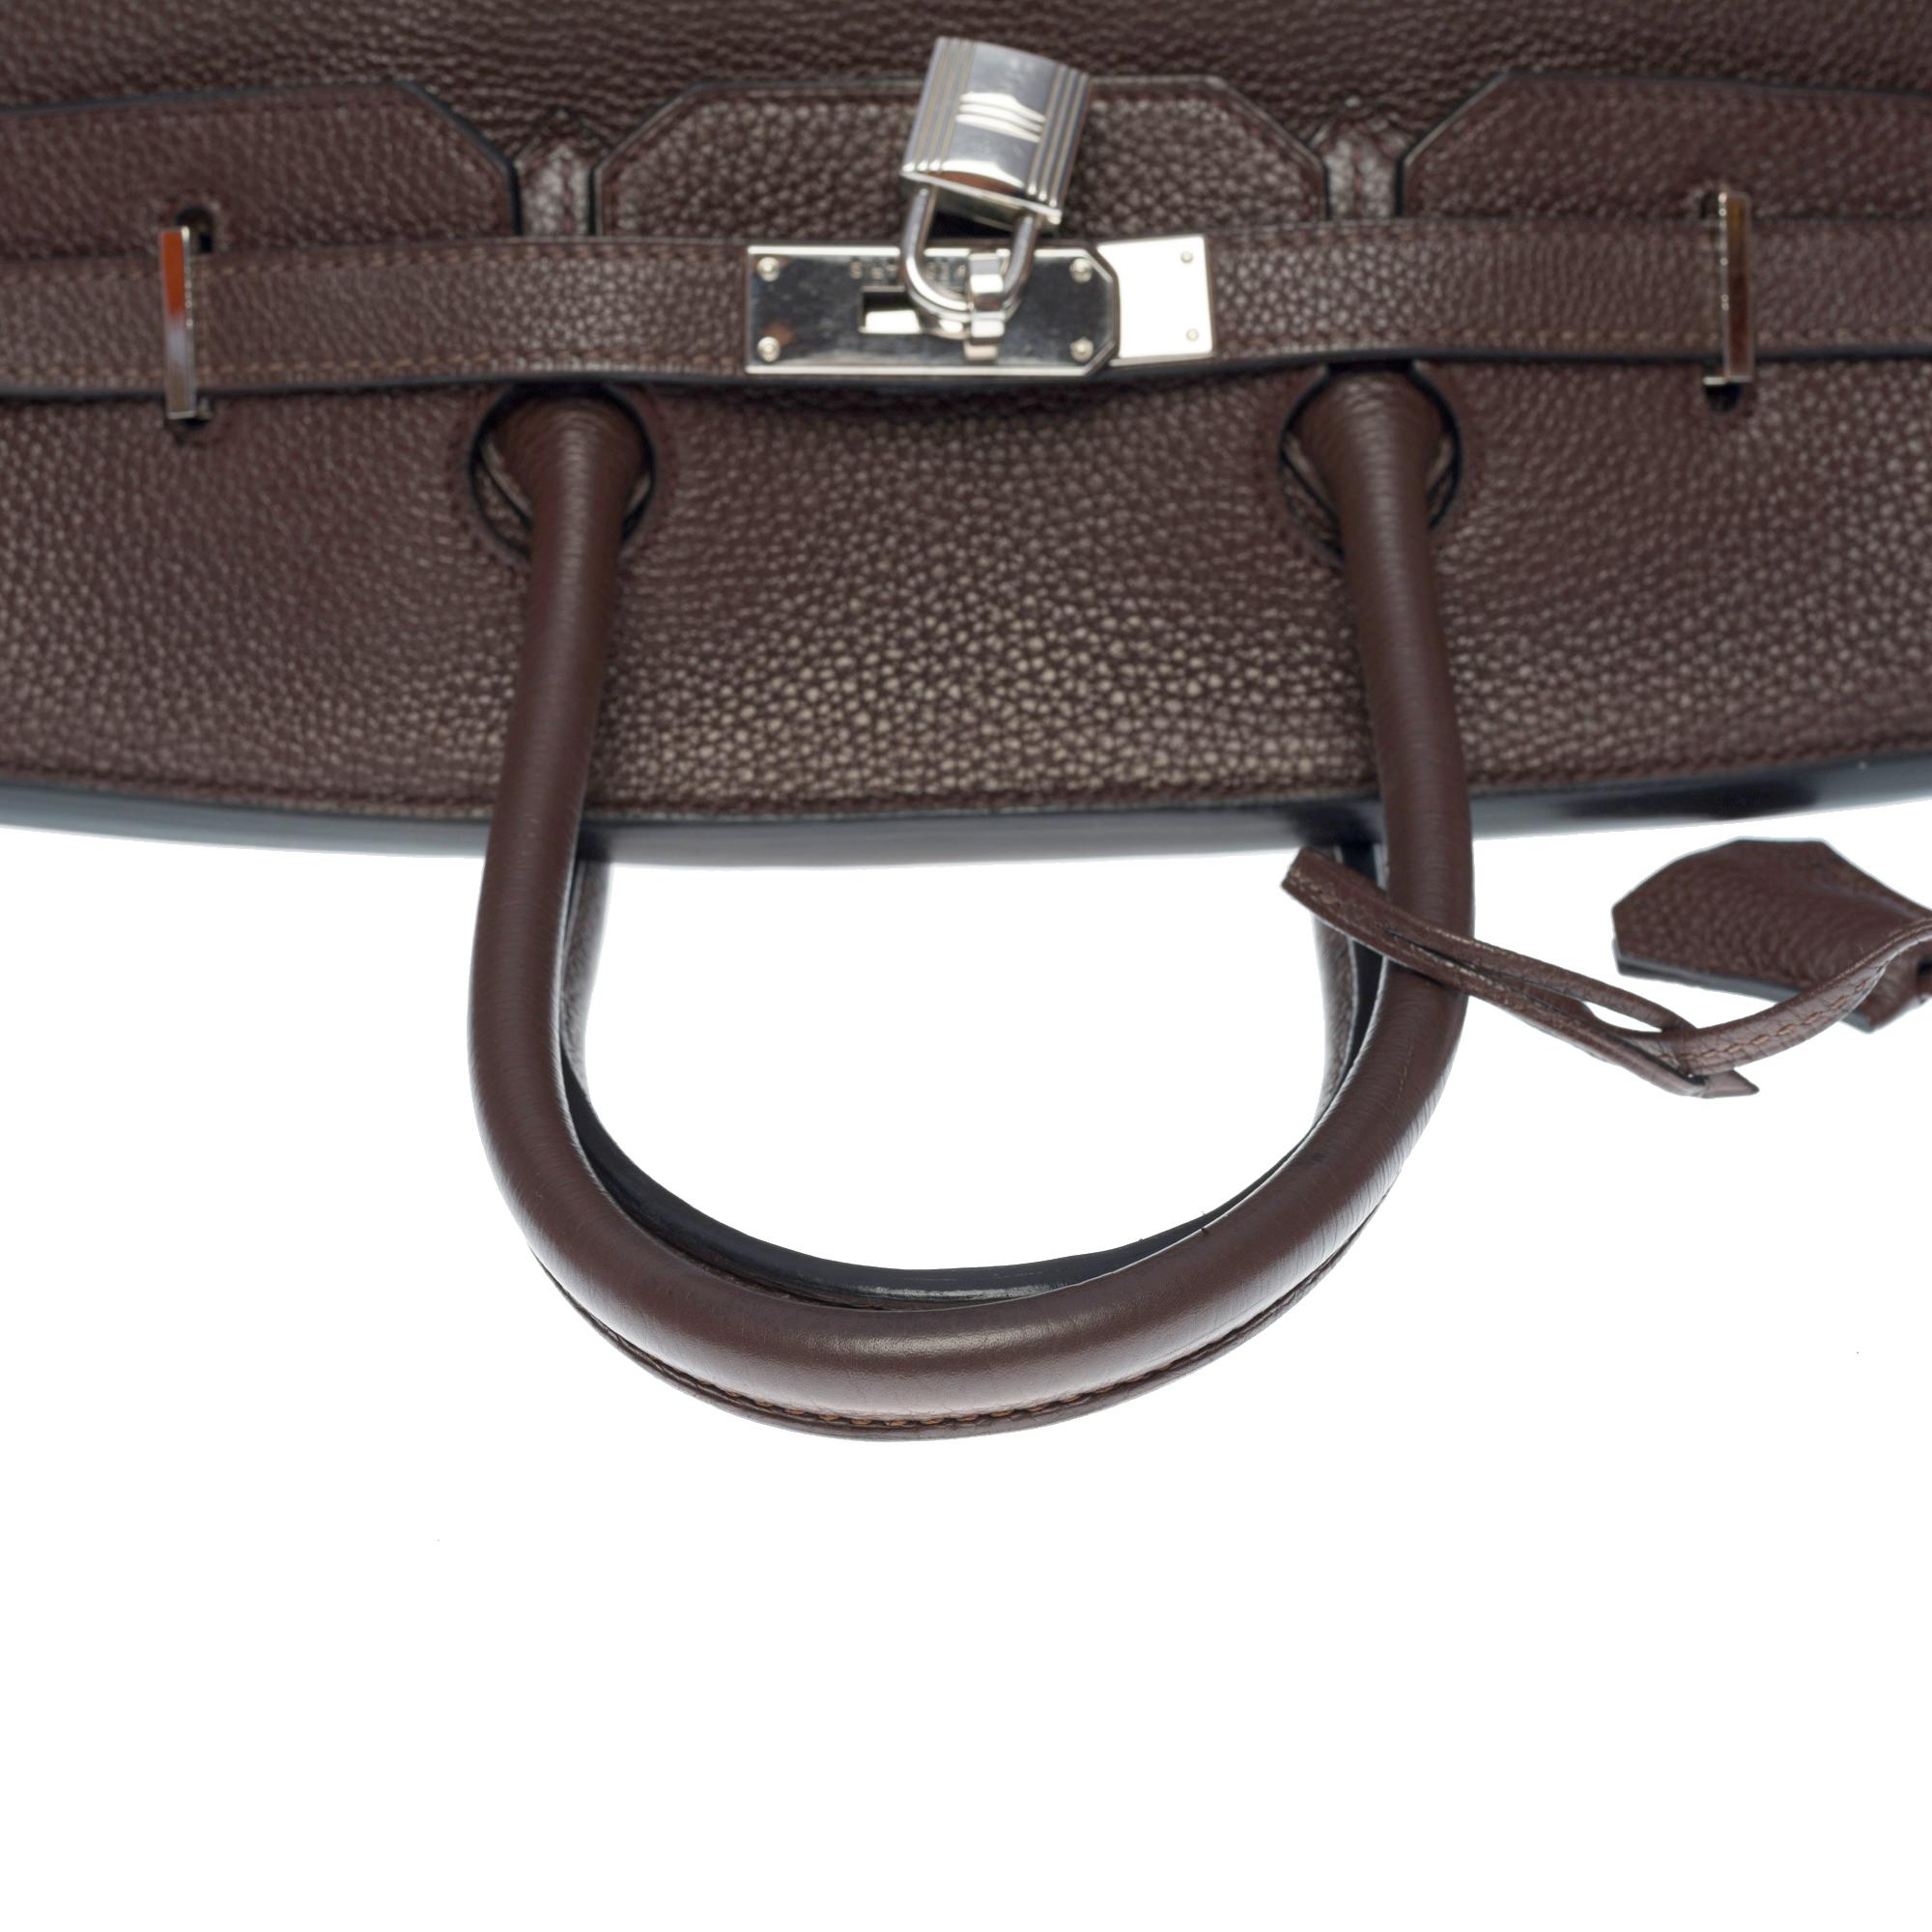 Splendid Hermès Birkin 35 handbag in brown Taurillon Clémence leather, SHW 3